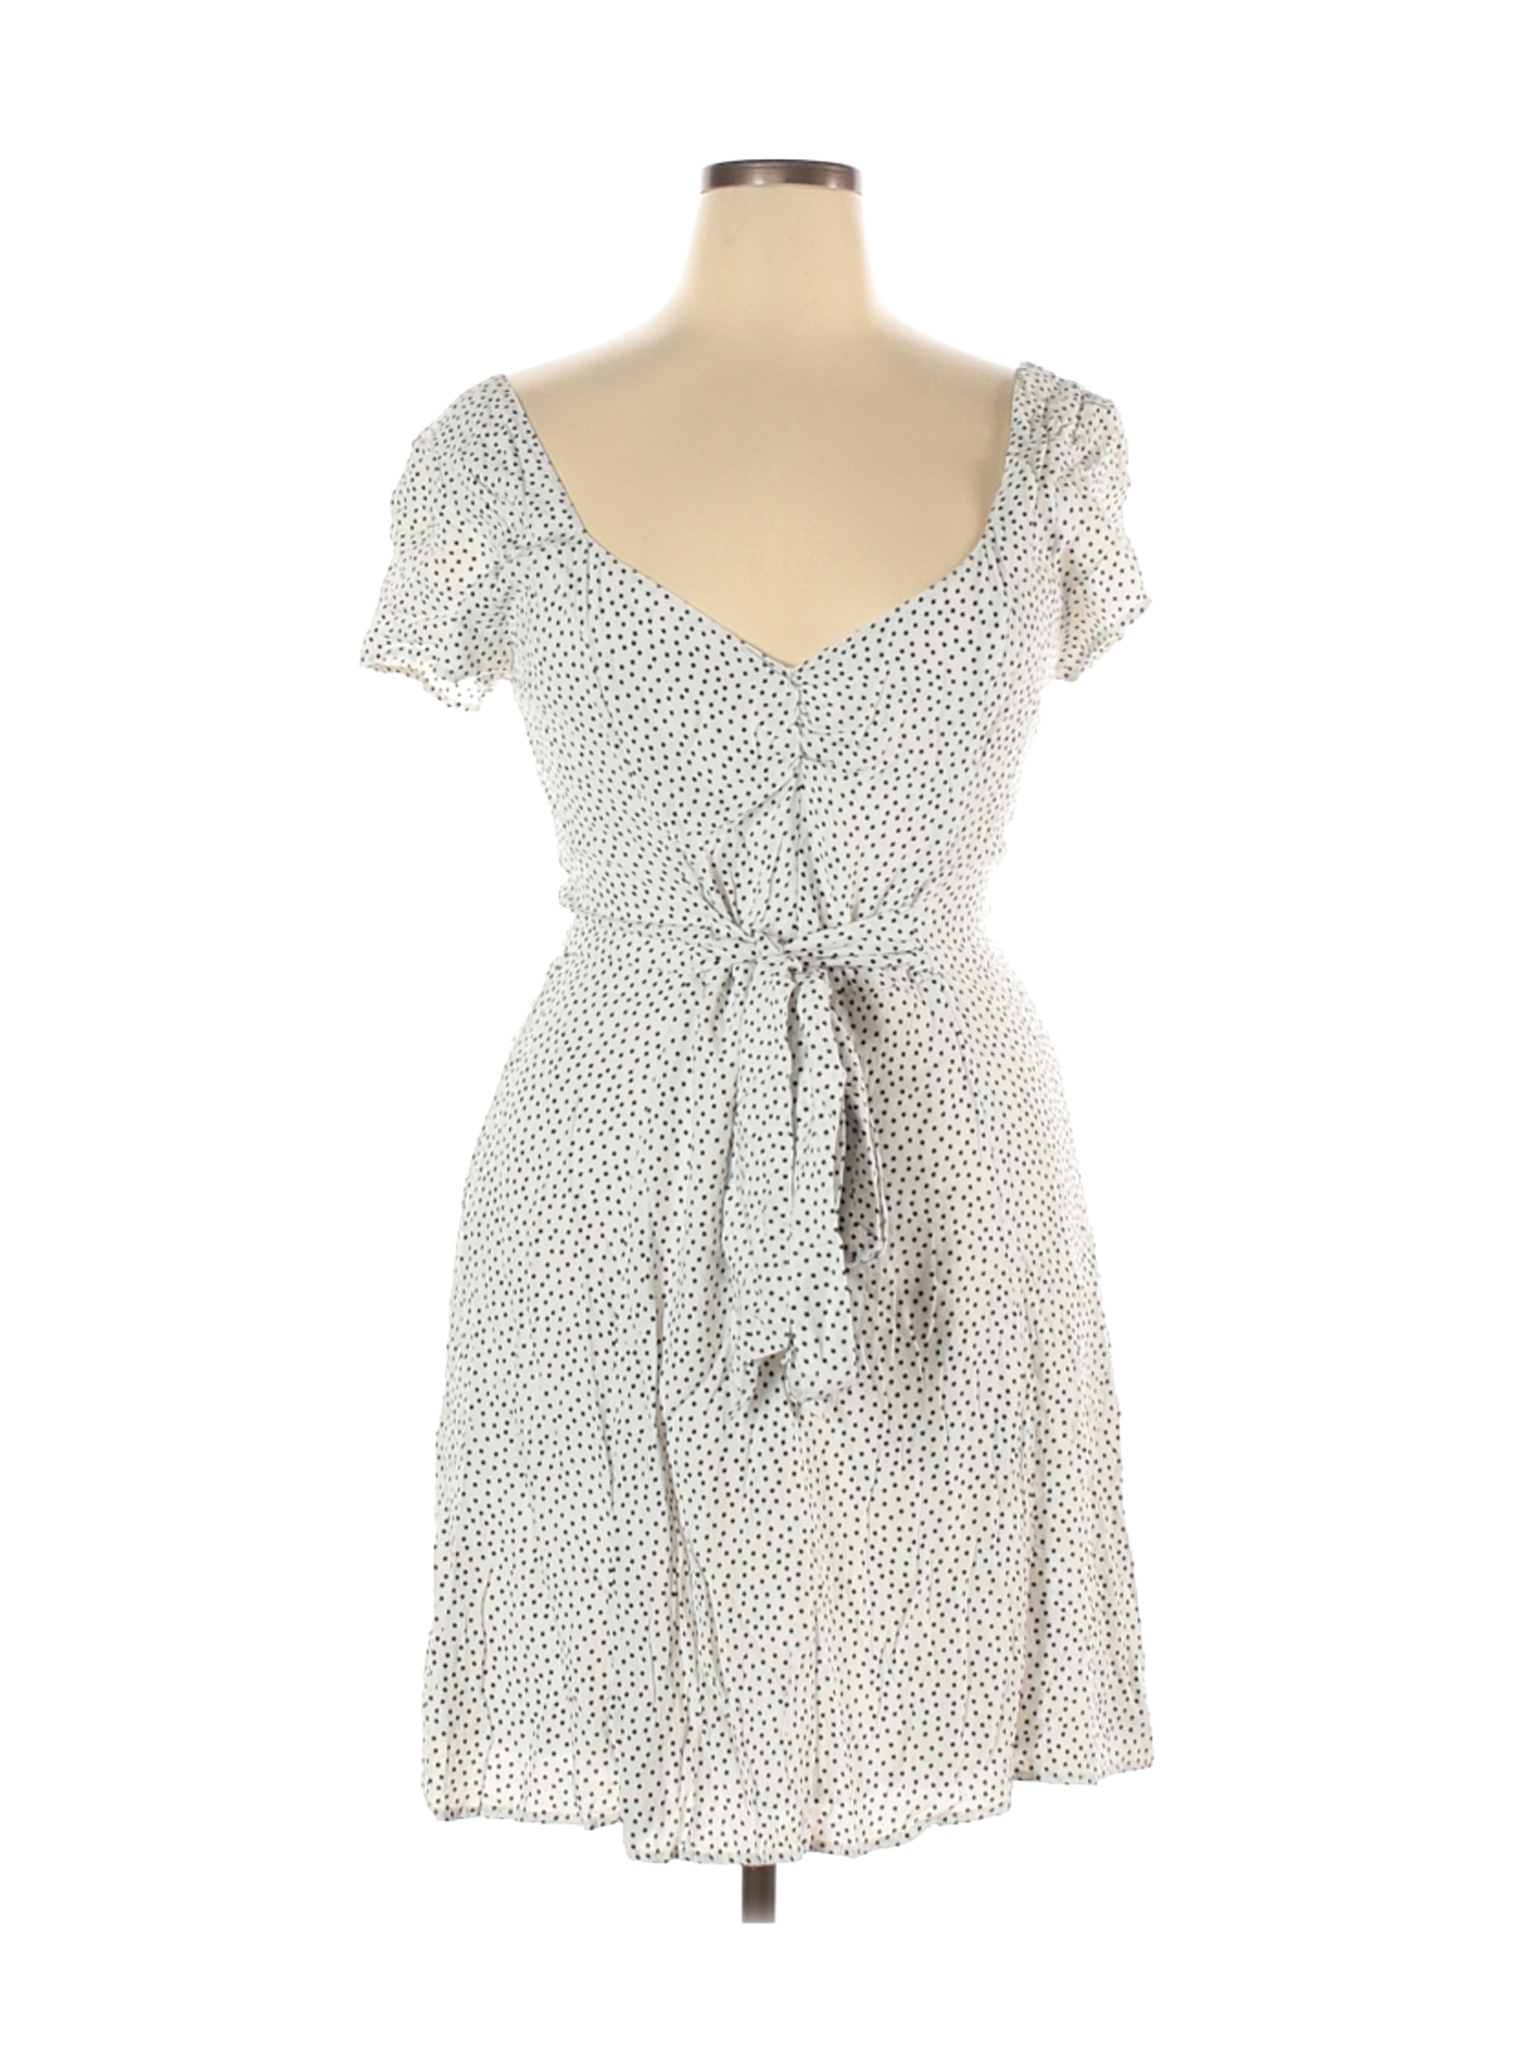 Abercrombie & Fitch Women White Casual Dress XL | eBay